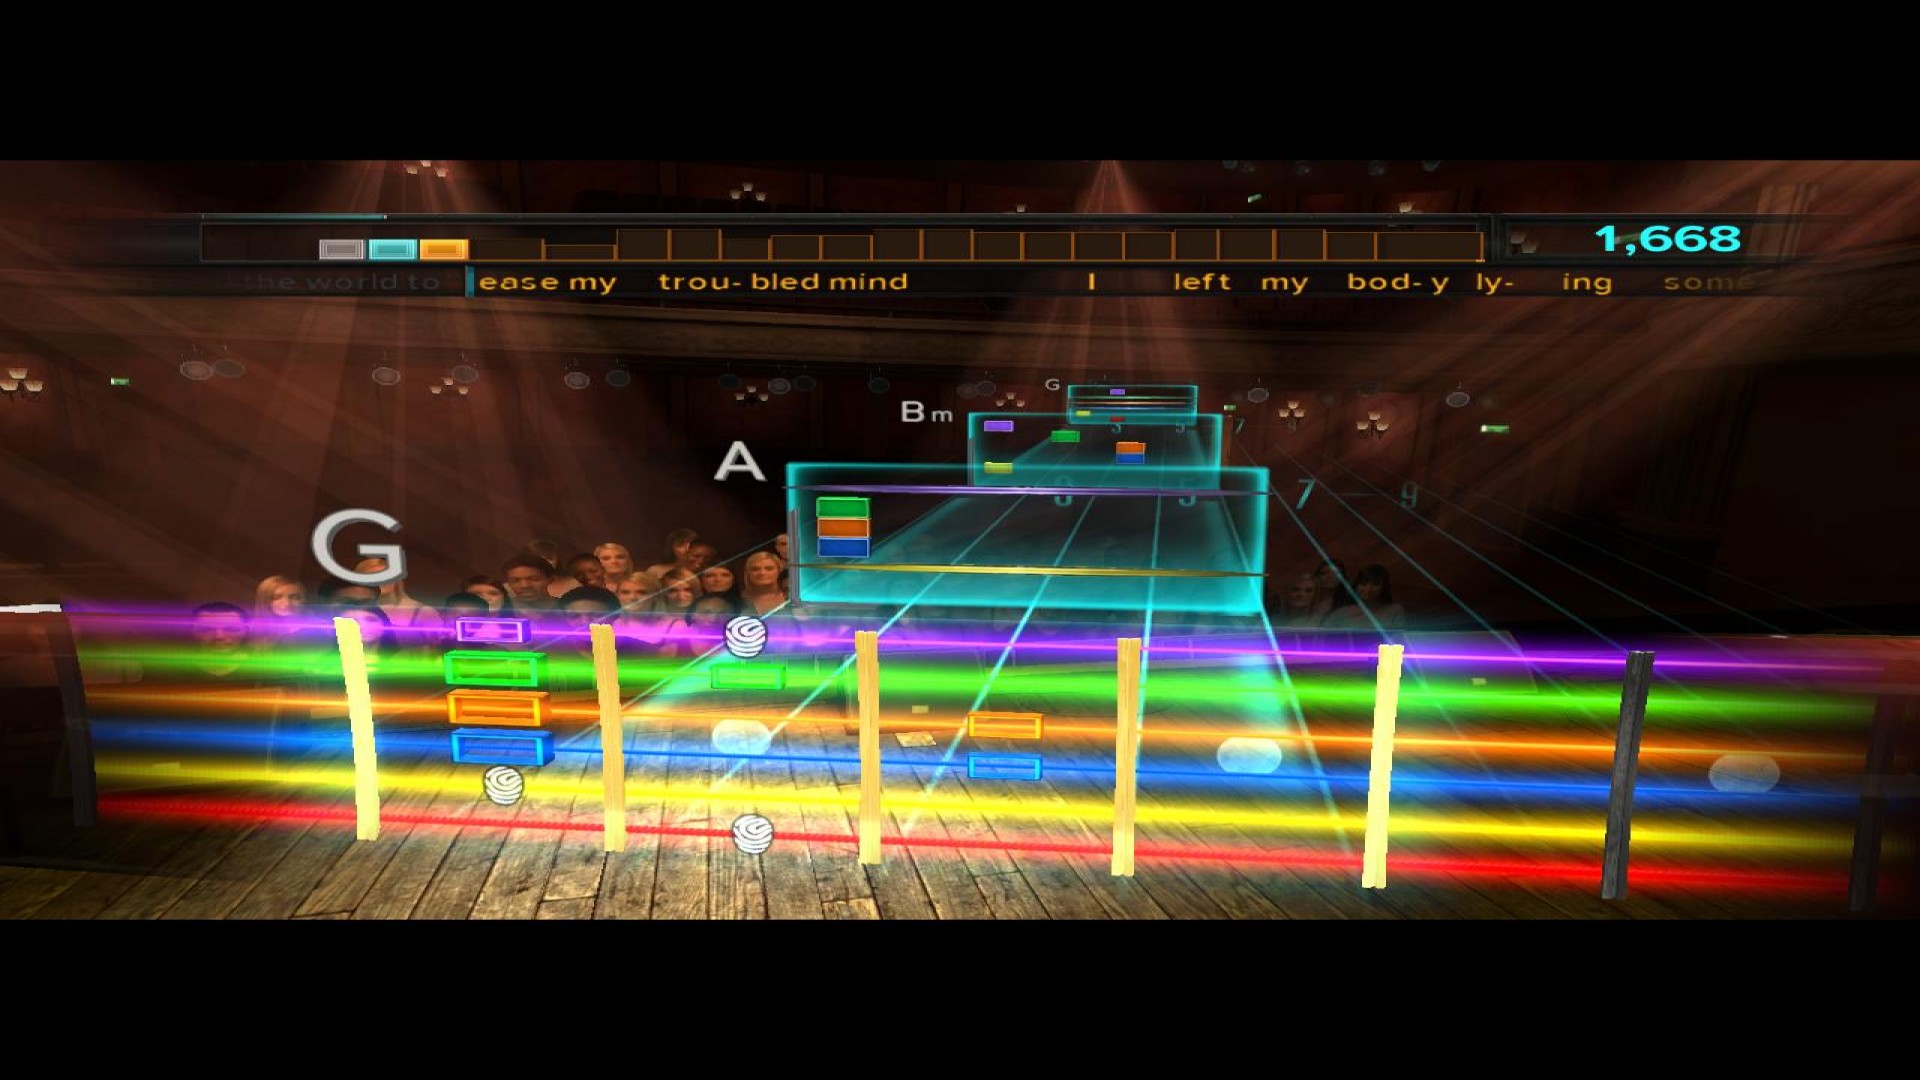 Rocksmith - 3 Doors Down - Kryptonite screenshot